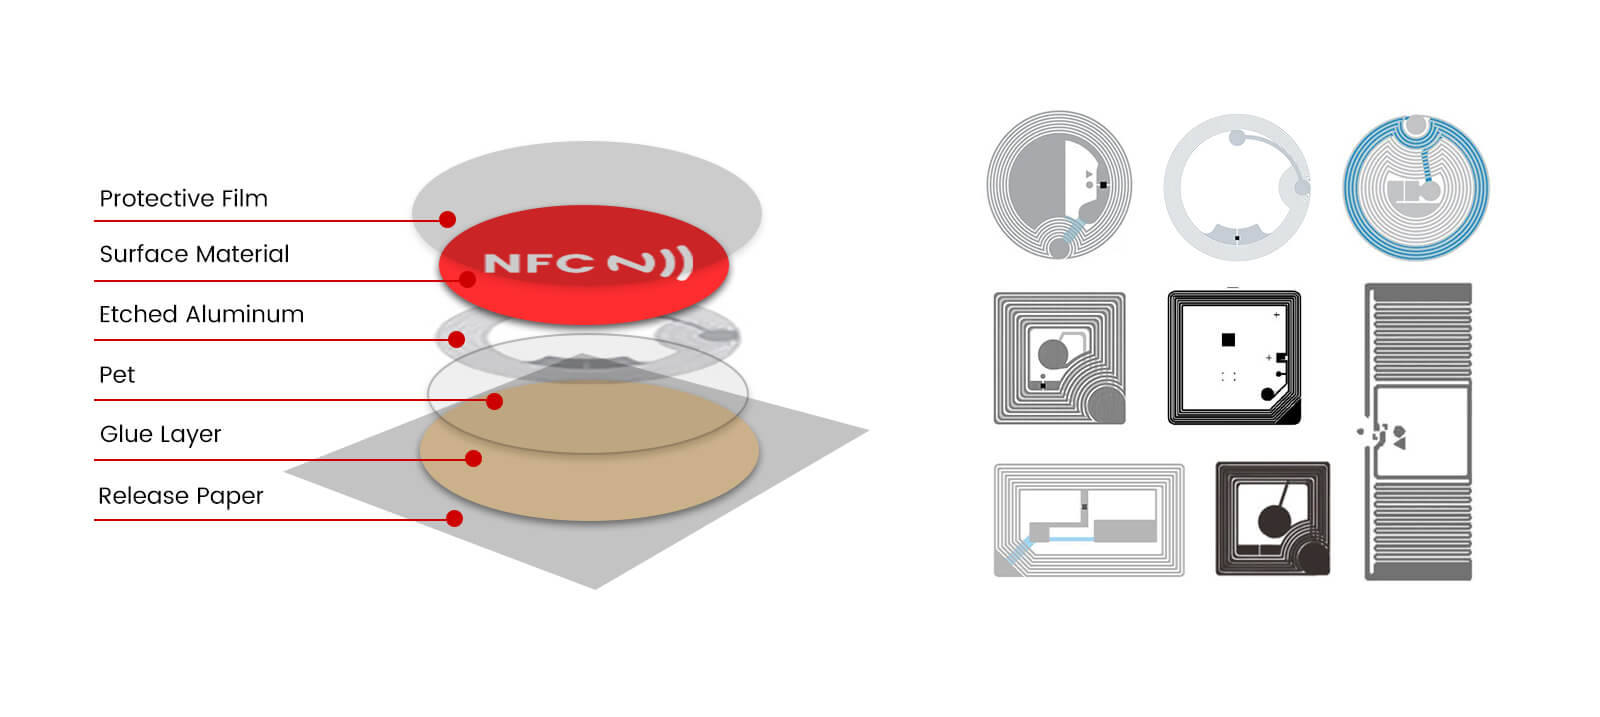 13.56Mhz NFC ICODE SLIX Sticker Tag